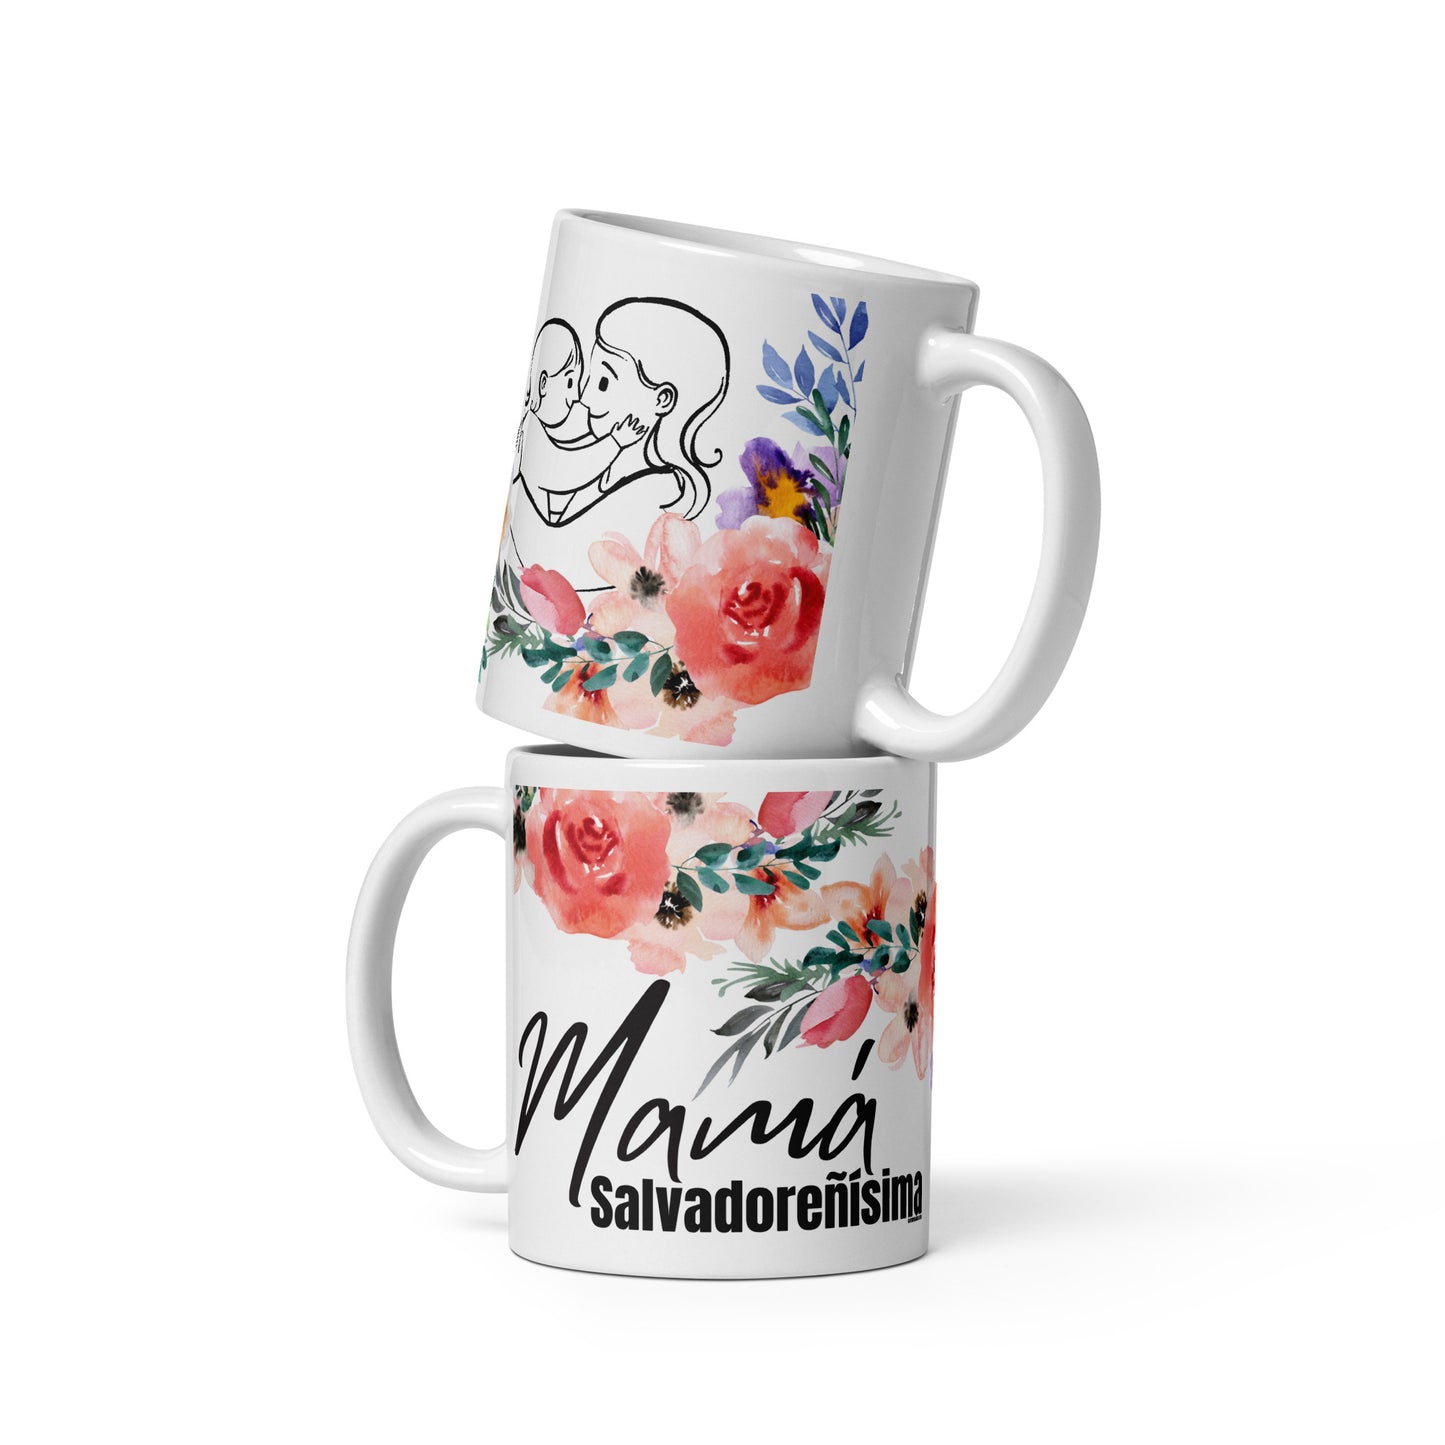 Mamá Salvadoreñísima - White glossy mug